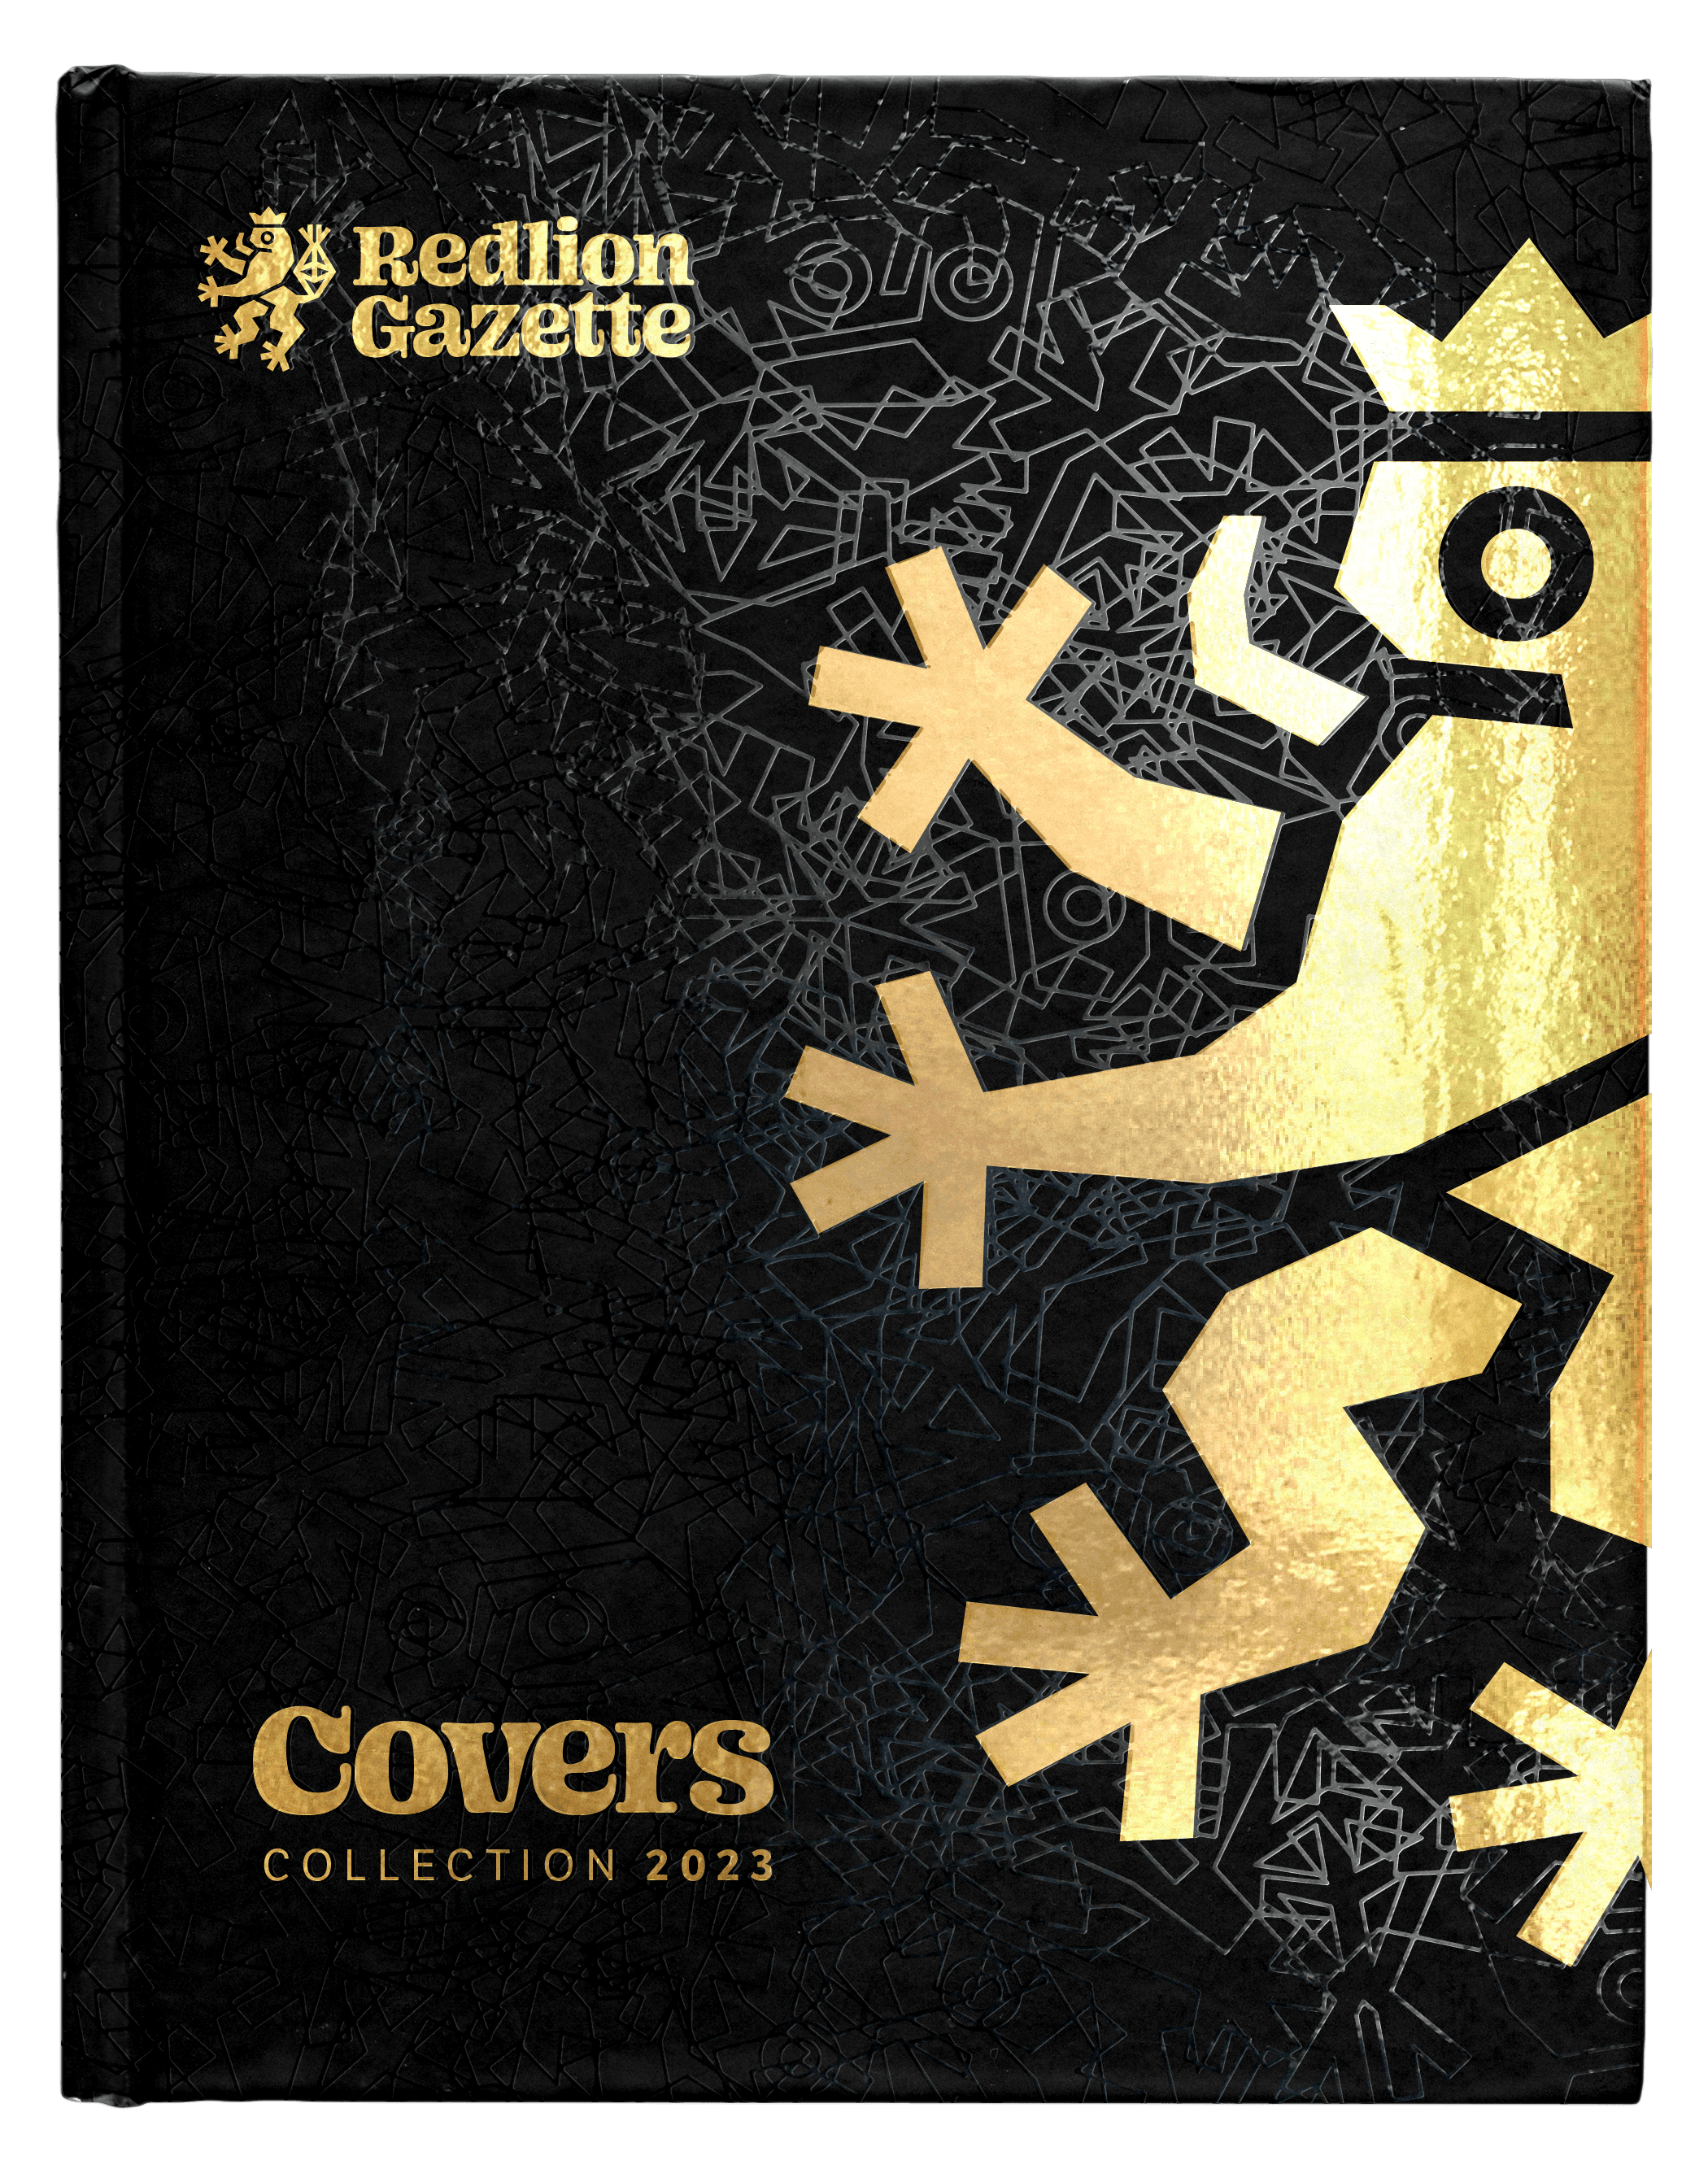 Redlion Gazette Covers: Collection 2023